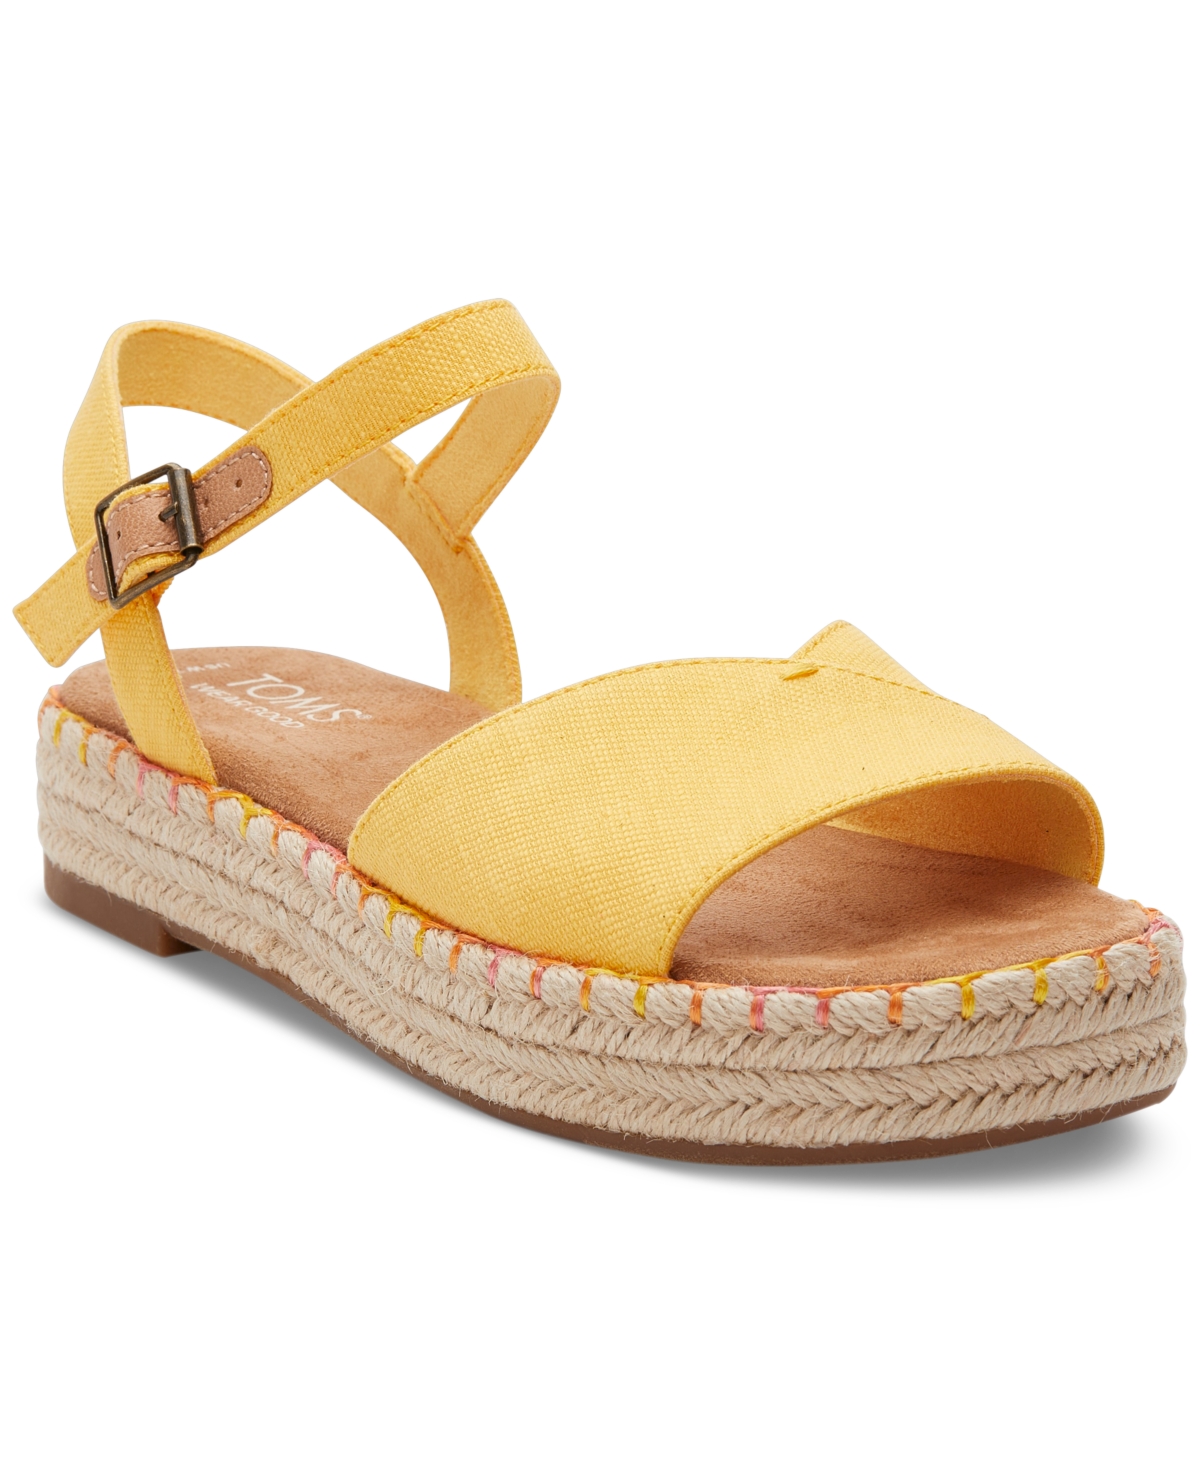 Women's Abby Braided Espadrille Flatform Sandals - Pineapple Yellow Slubby Woven